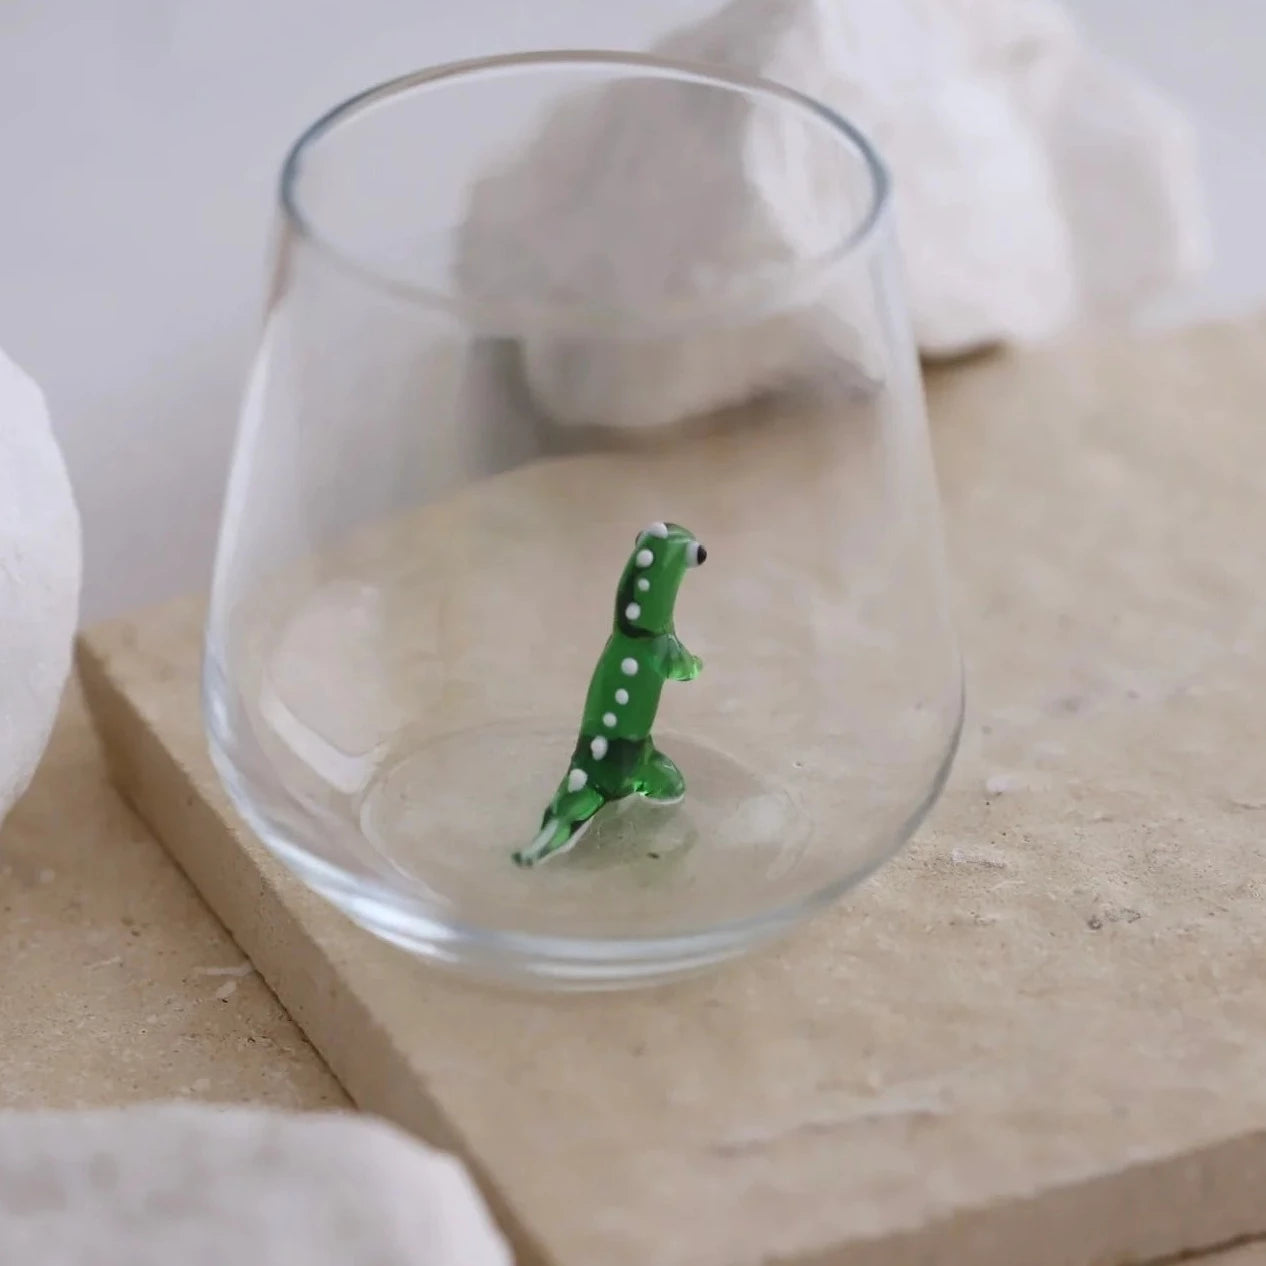 Tiny Animal Wine Glass, Dinosaur Decor MiniZoo 